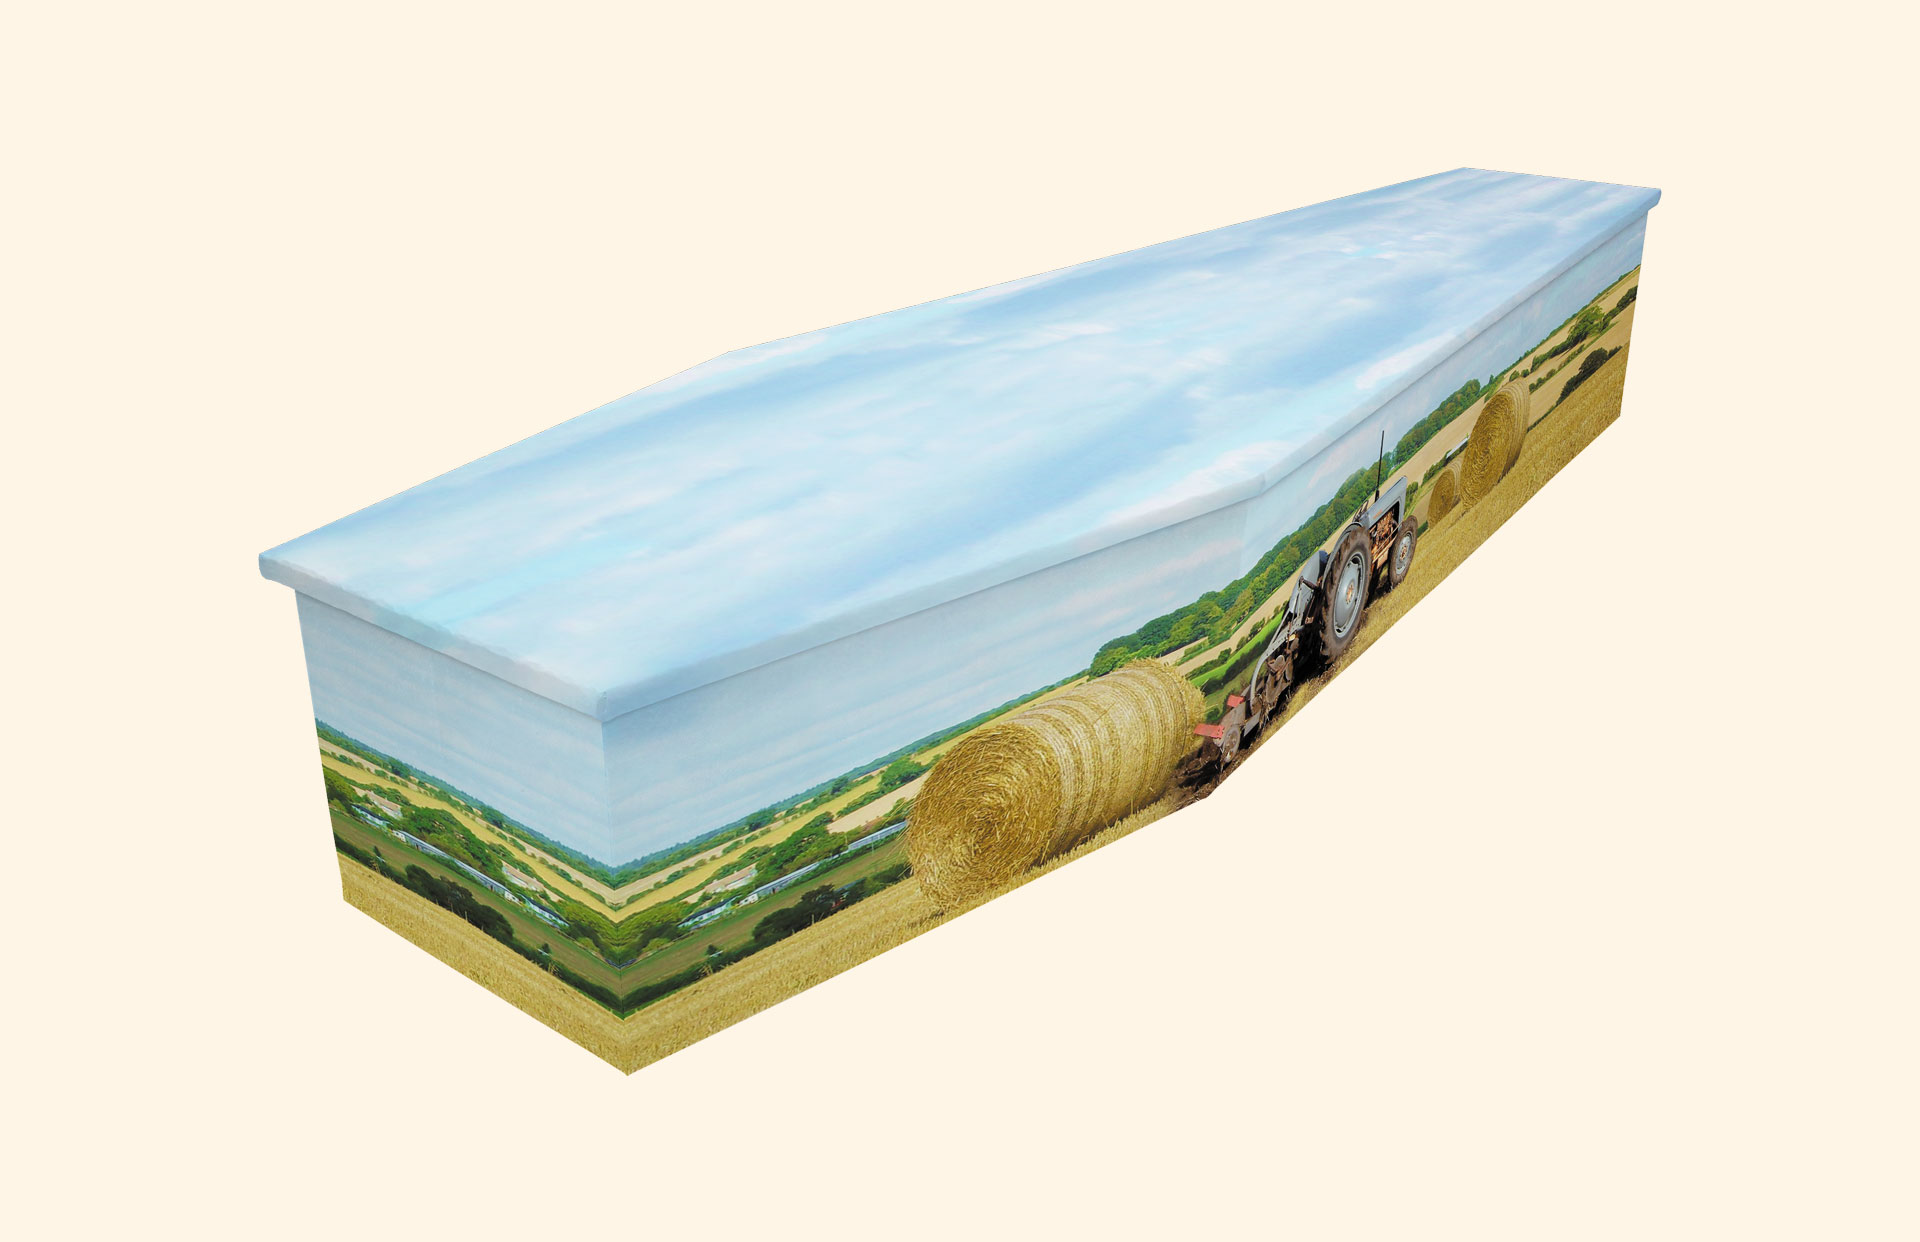 Hayfield design on a cardboard coffin